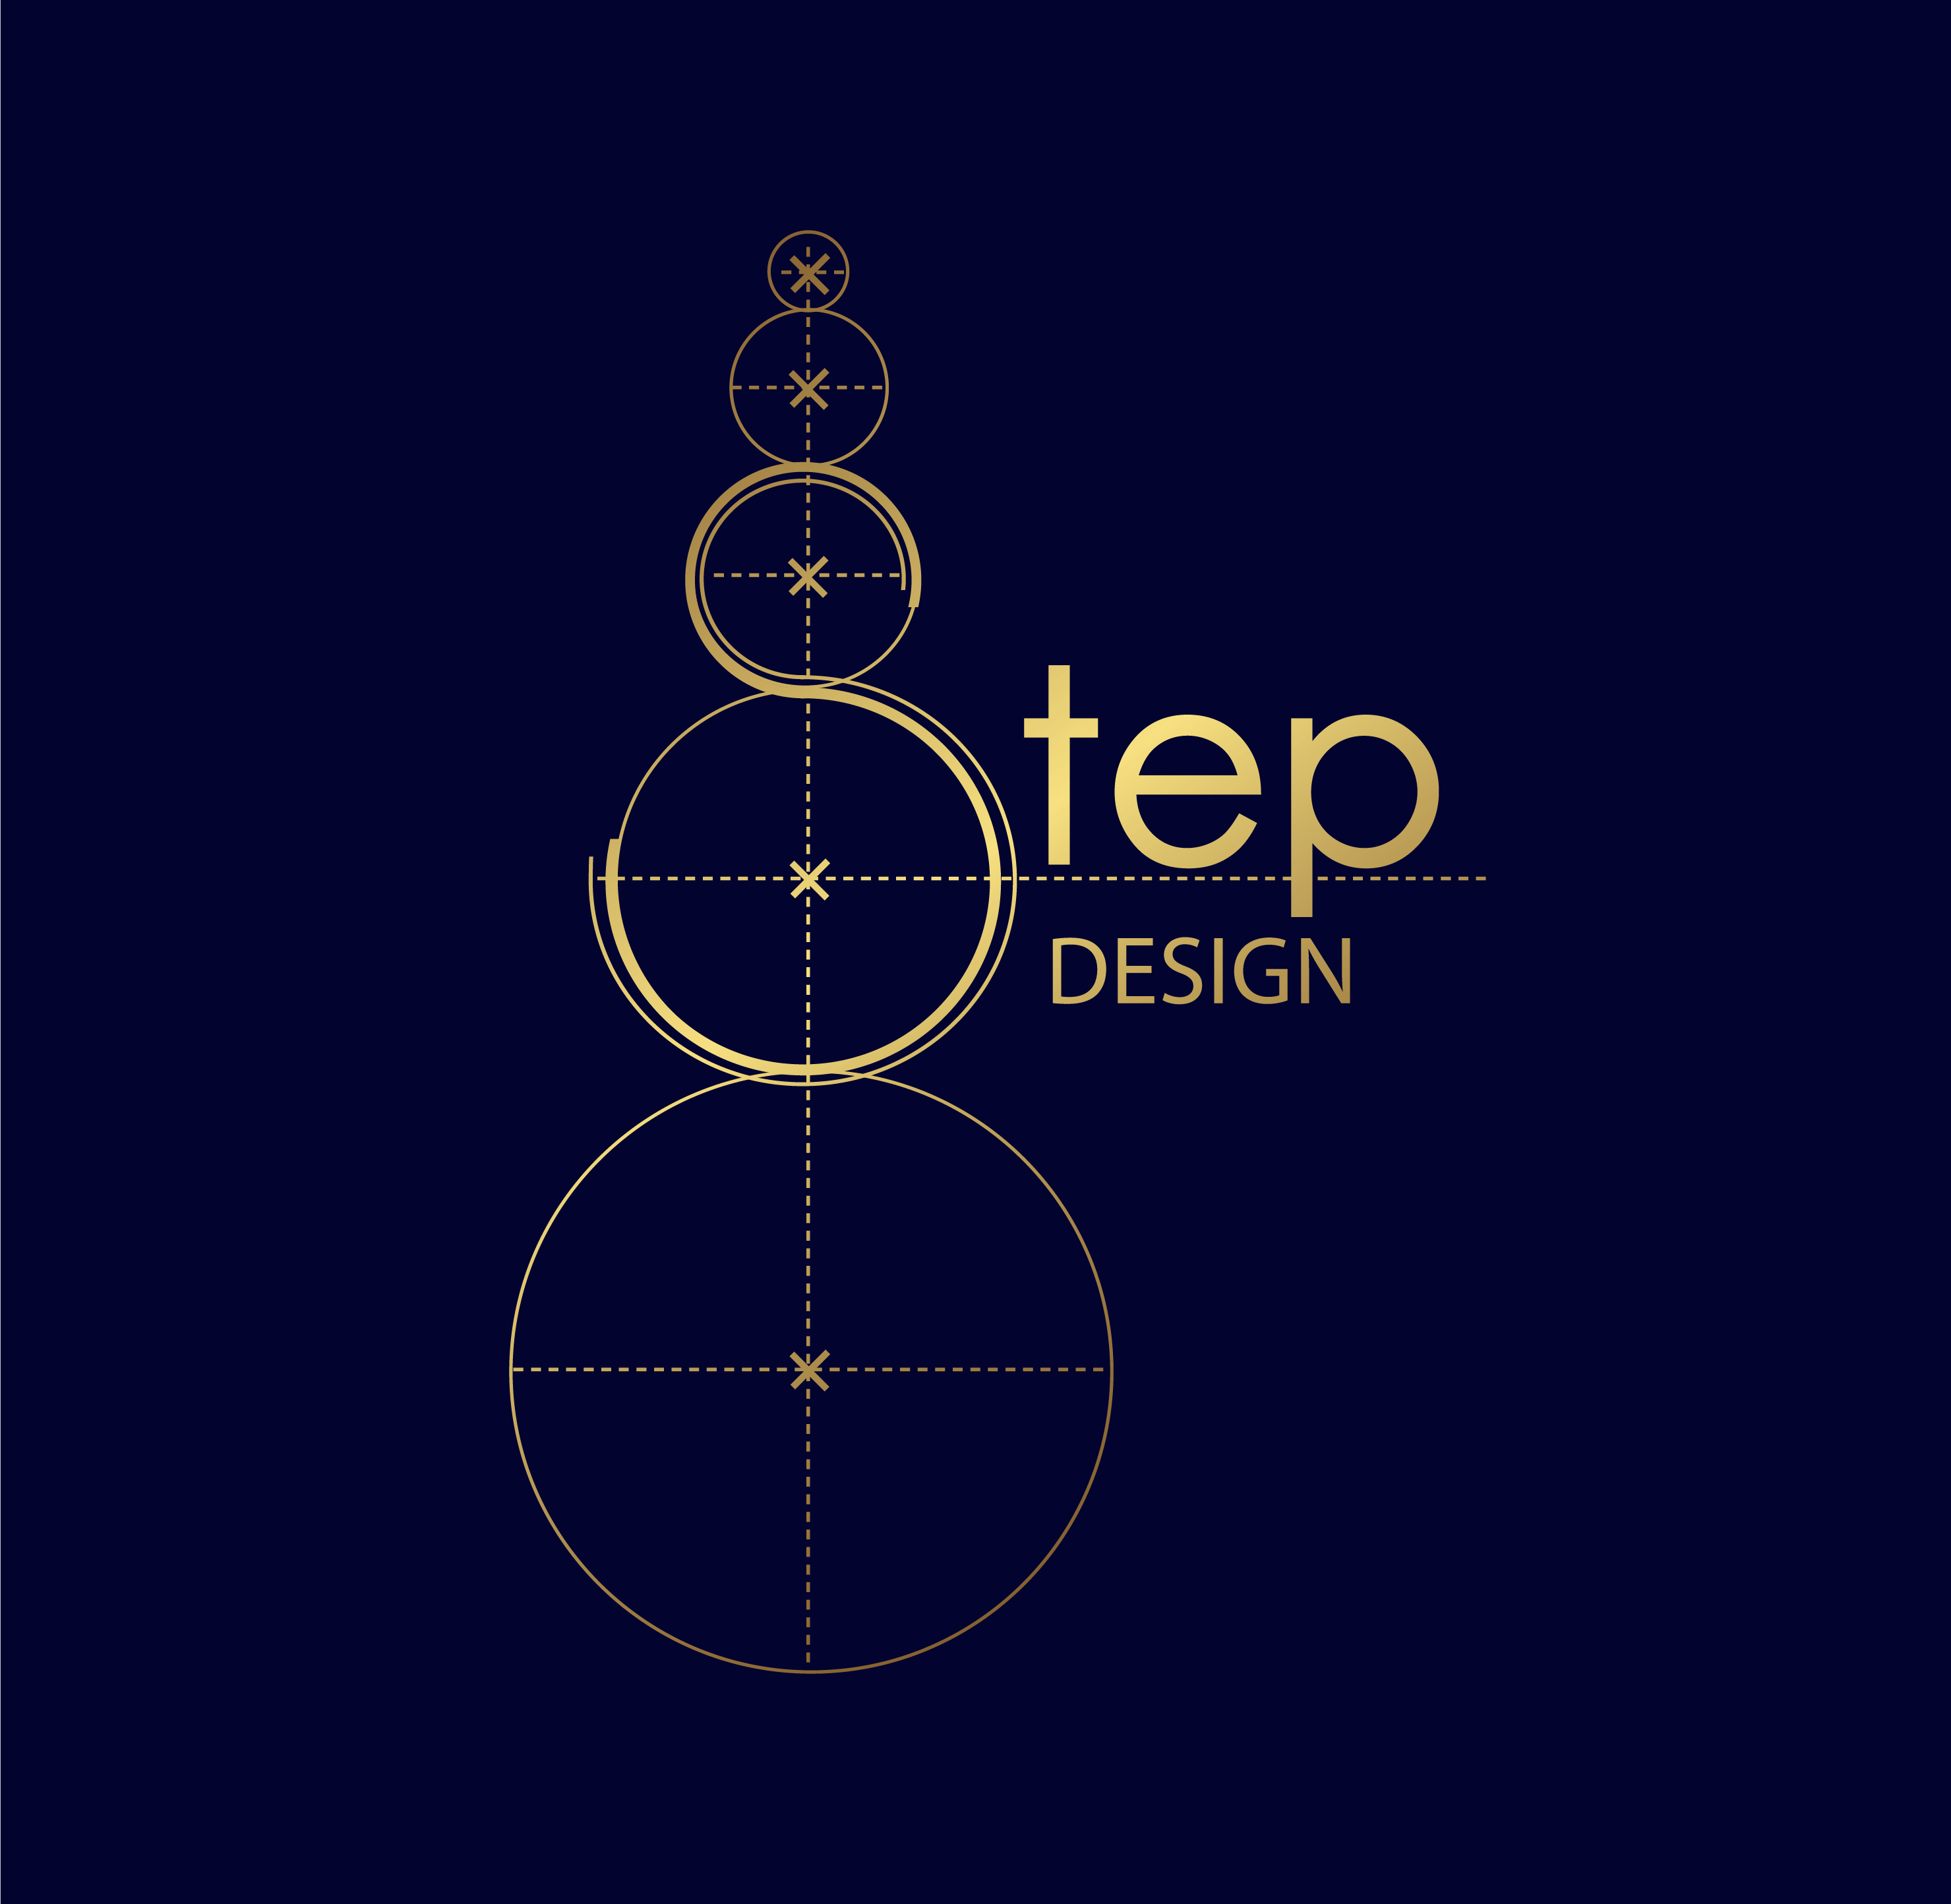 Step Design